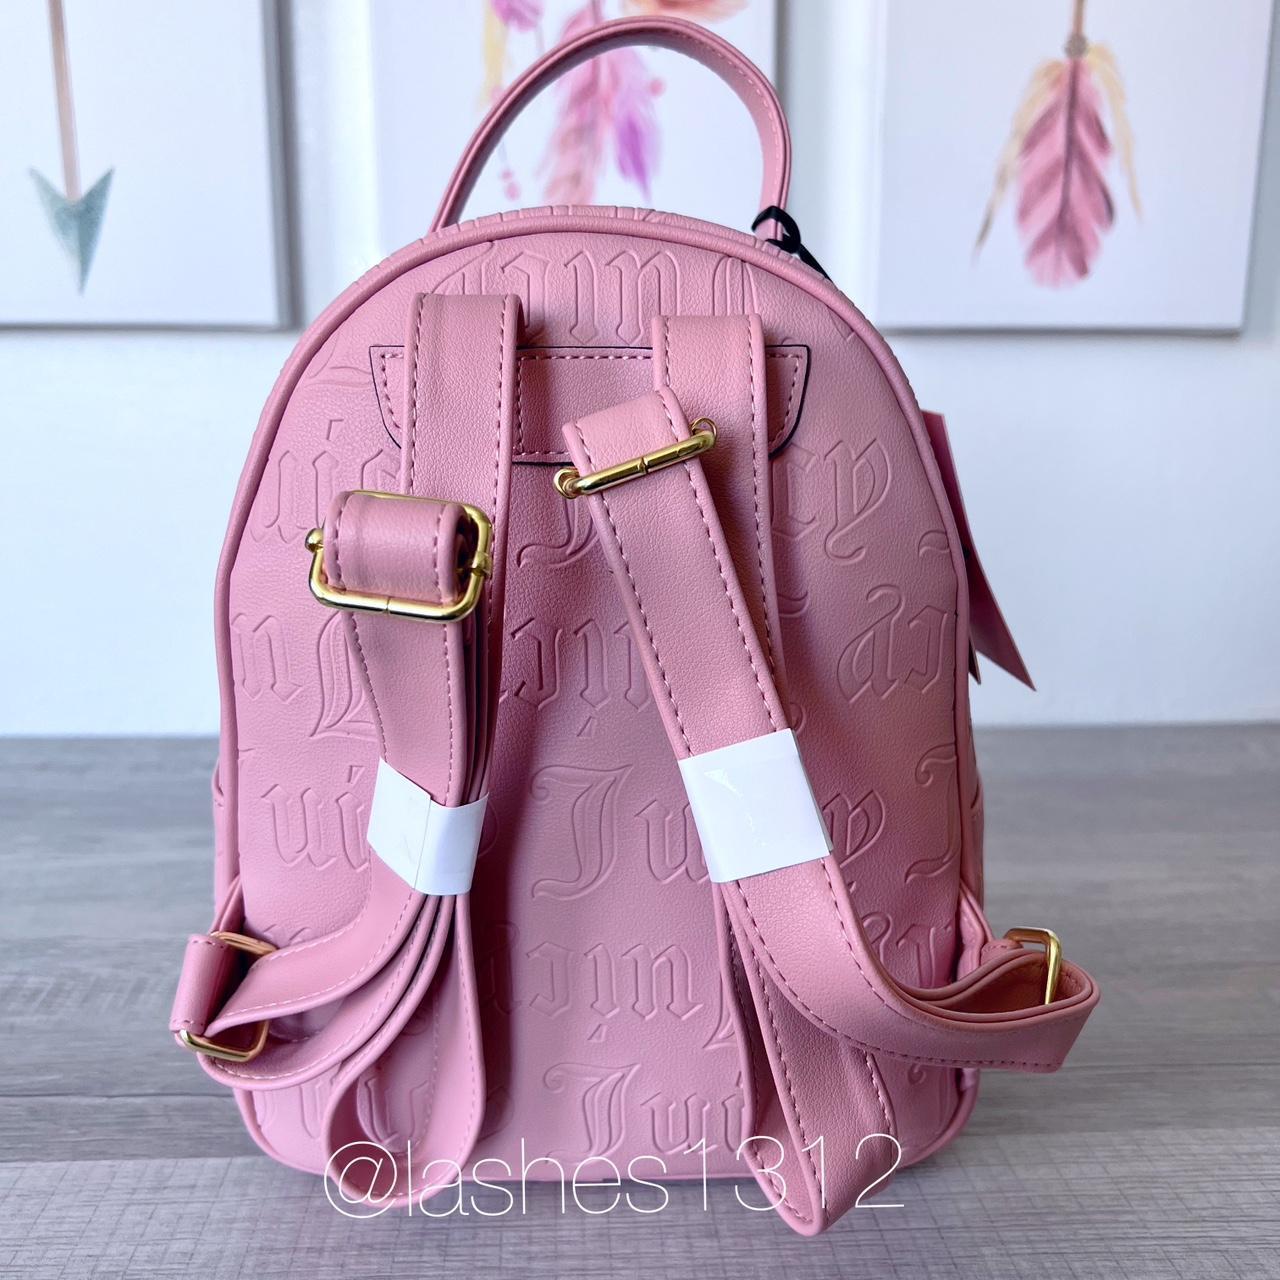 Sorbonne louis vuitton pink backpack #lv - Depop